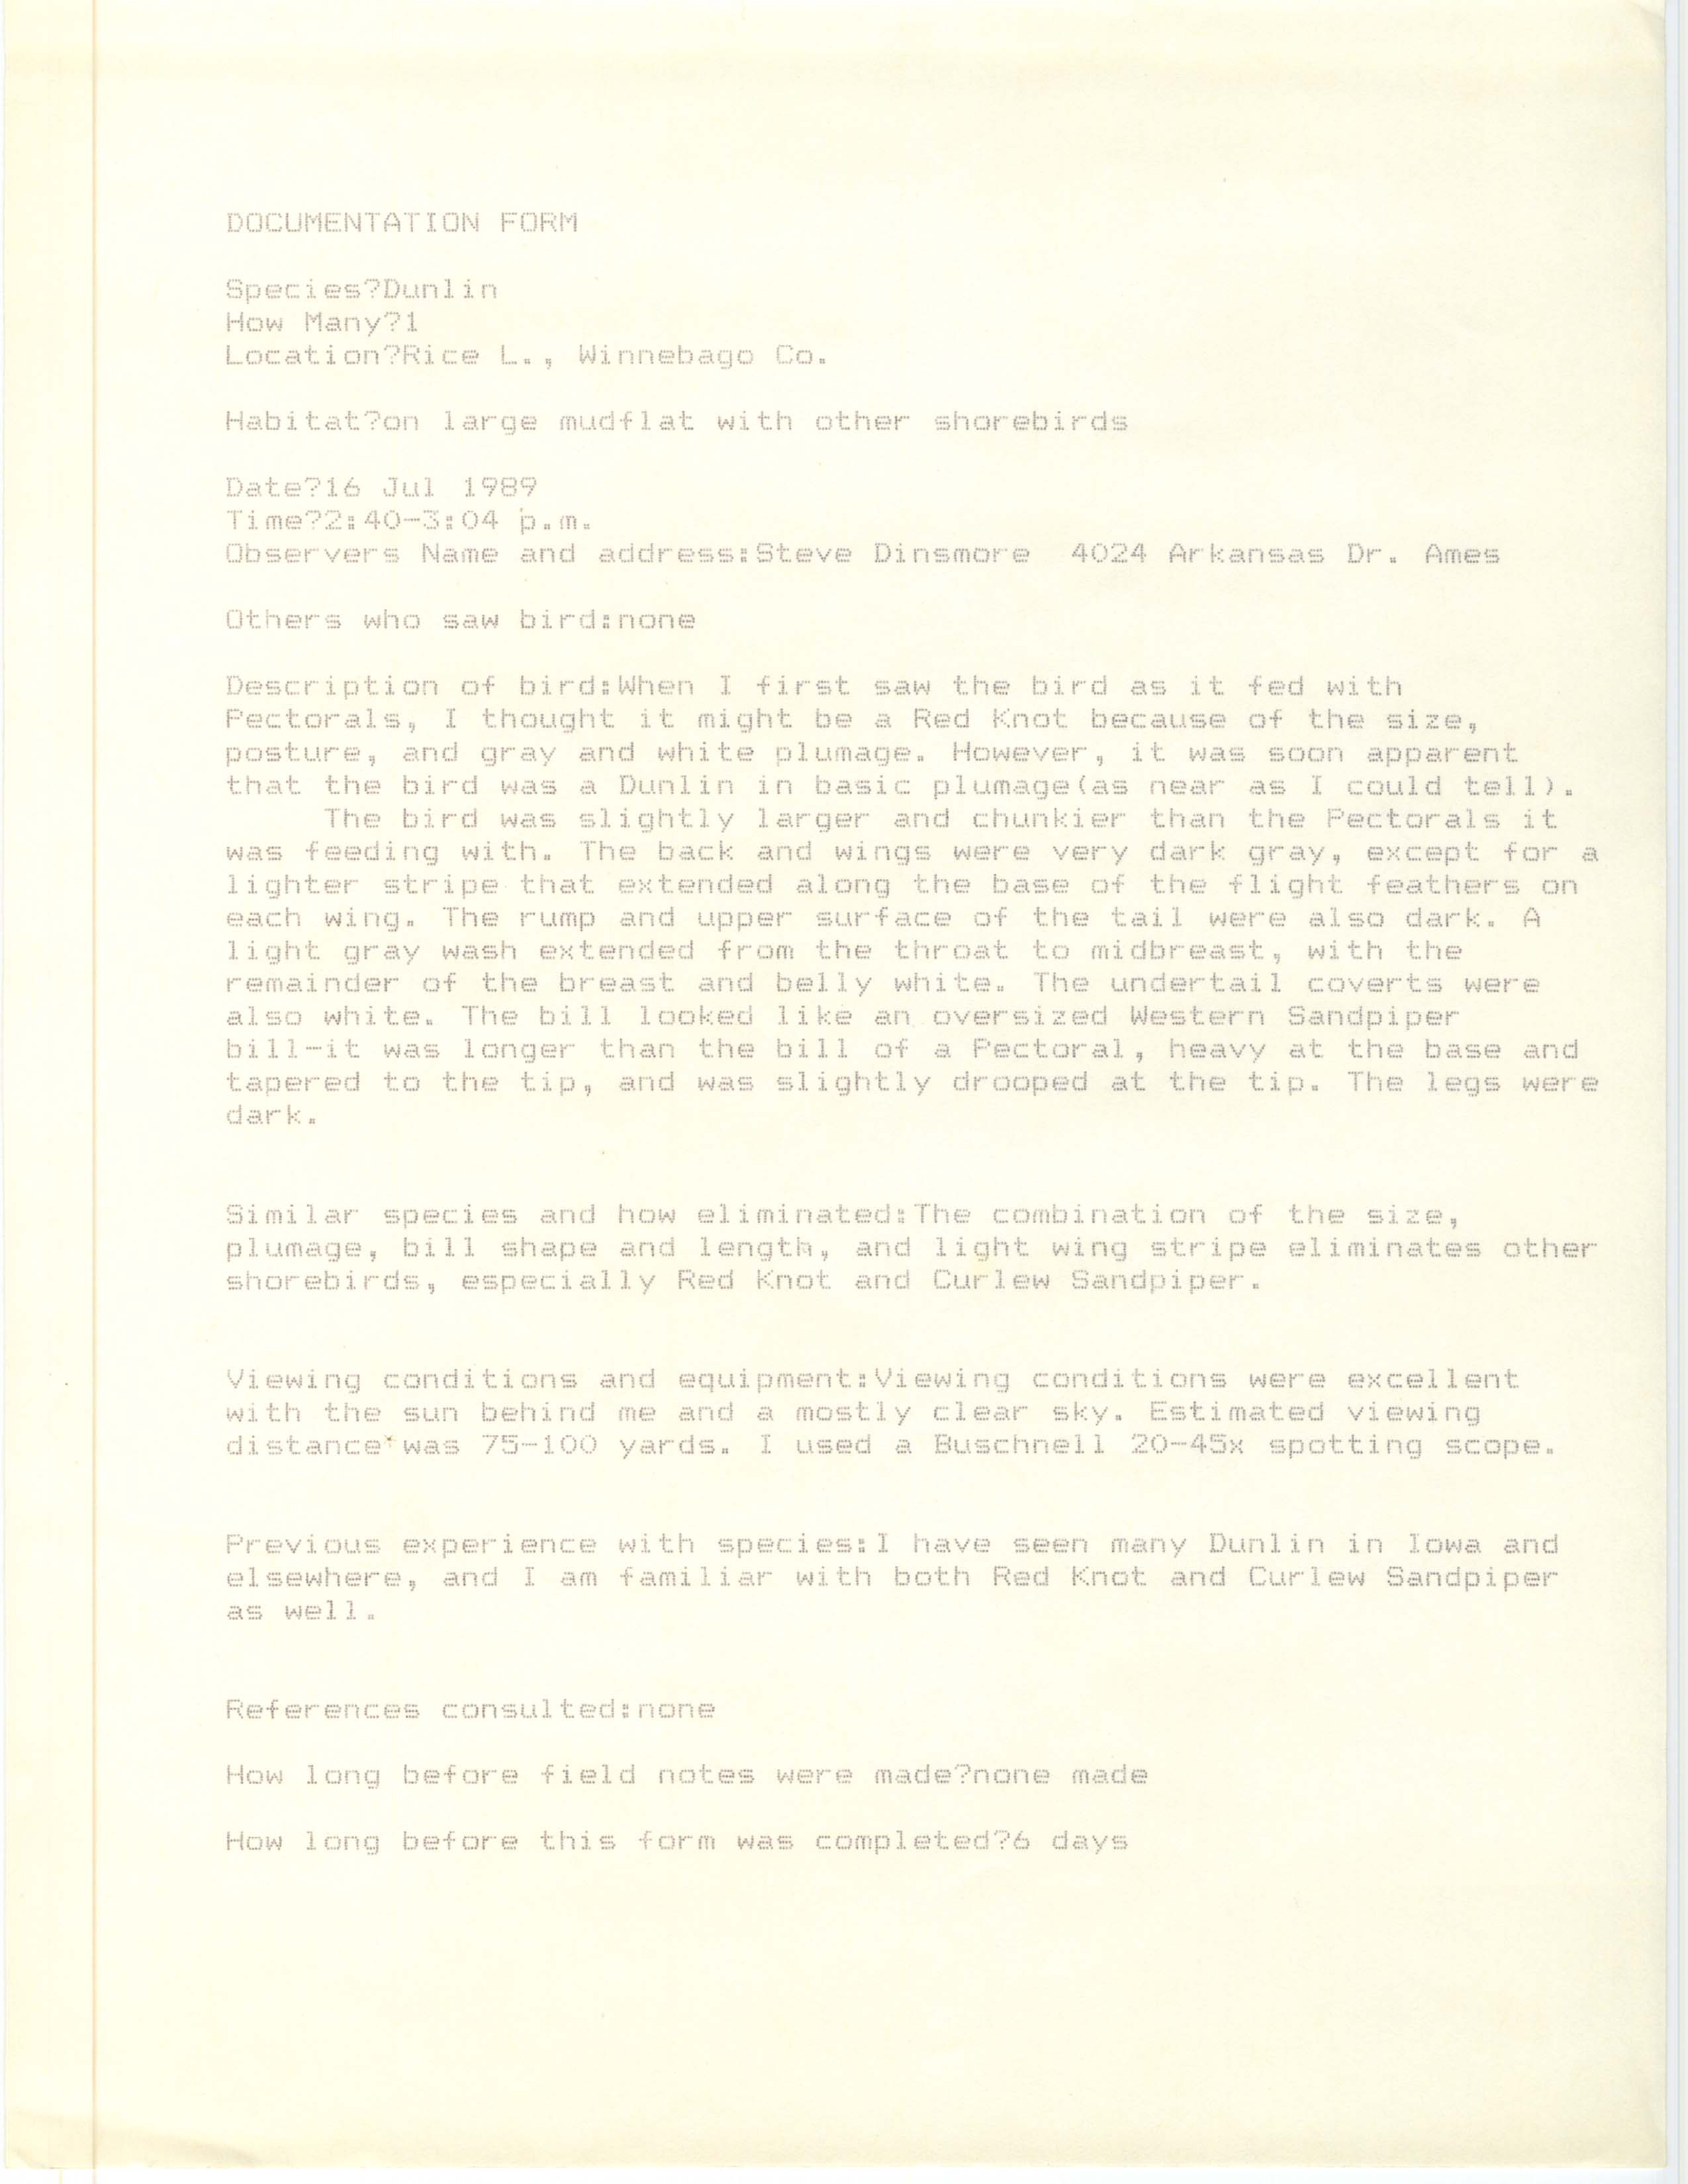 Rare bird documentation form for Dunlin at Rice Lake, 1989